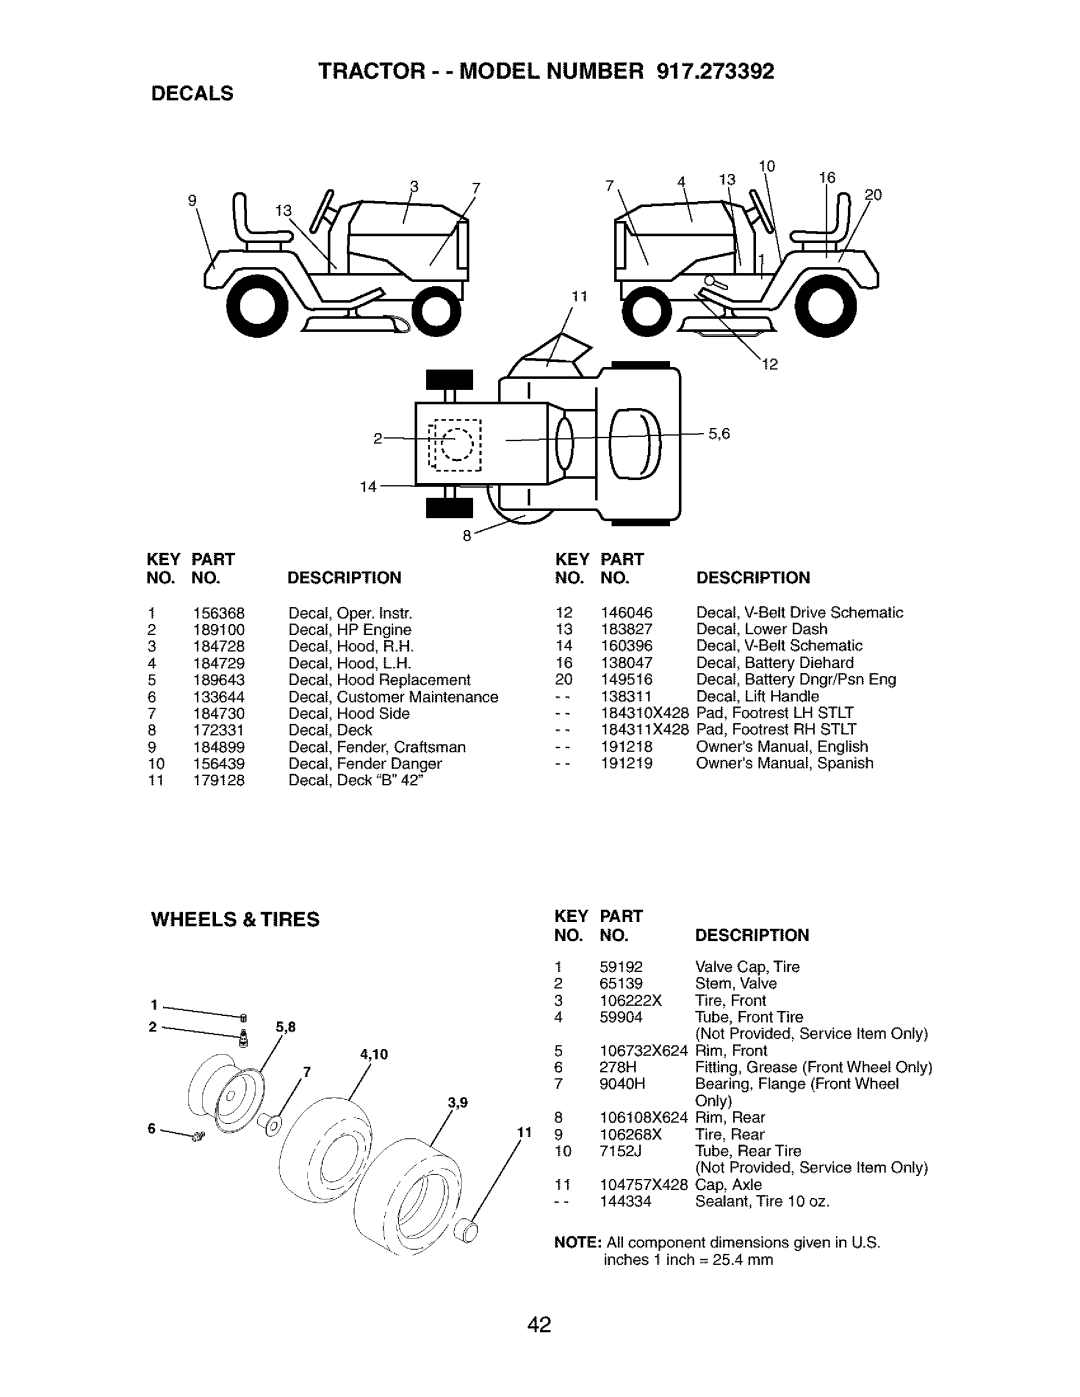 Craftsman 917.273392 manual Tractor - - Model Number Decals, Part, Wheels &Tires 